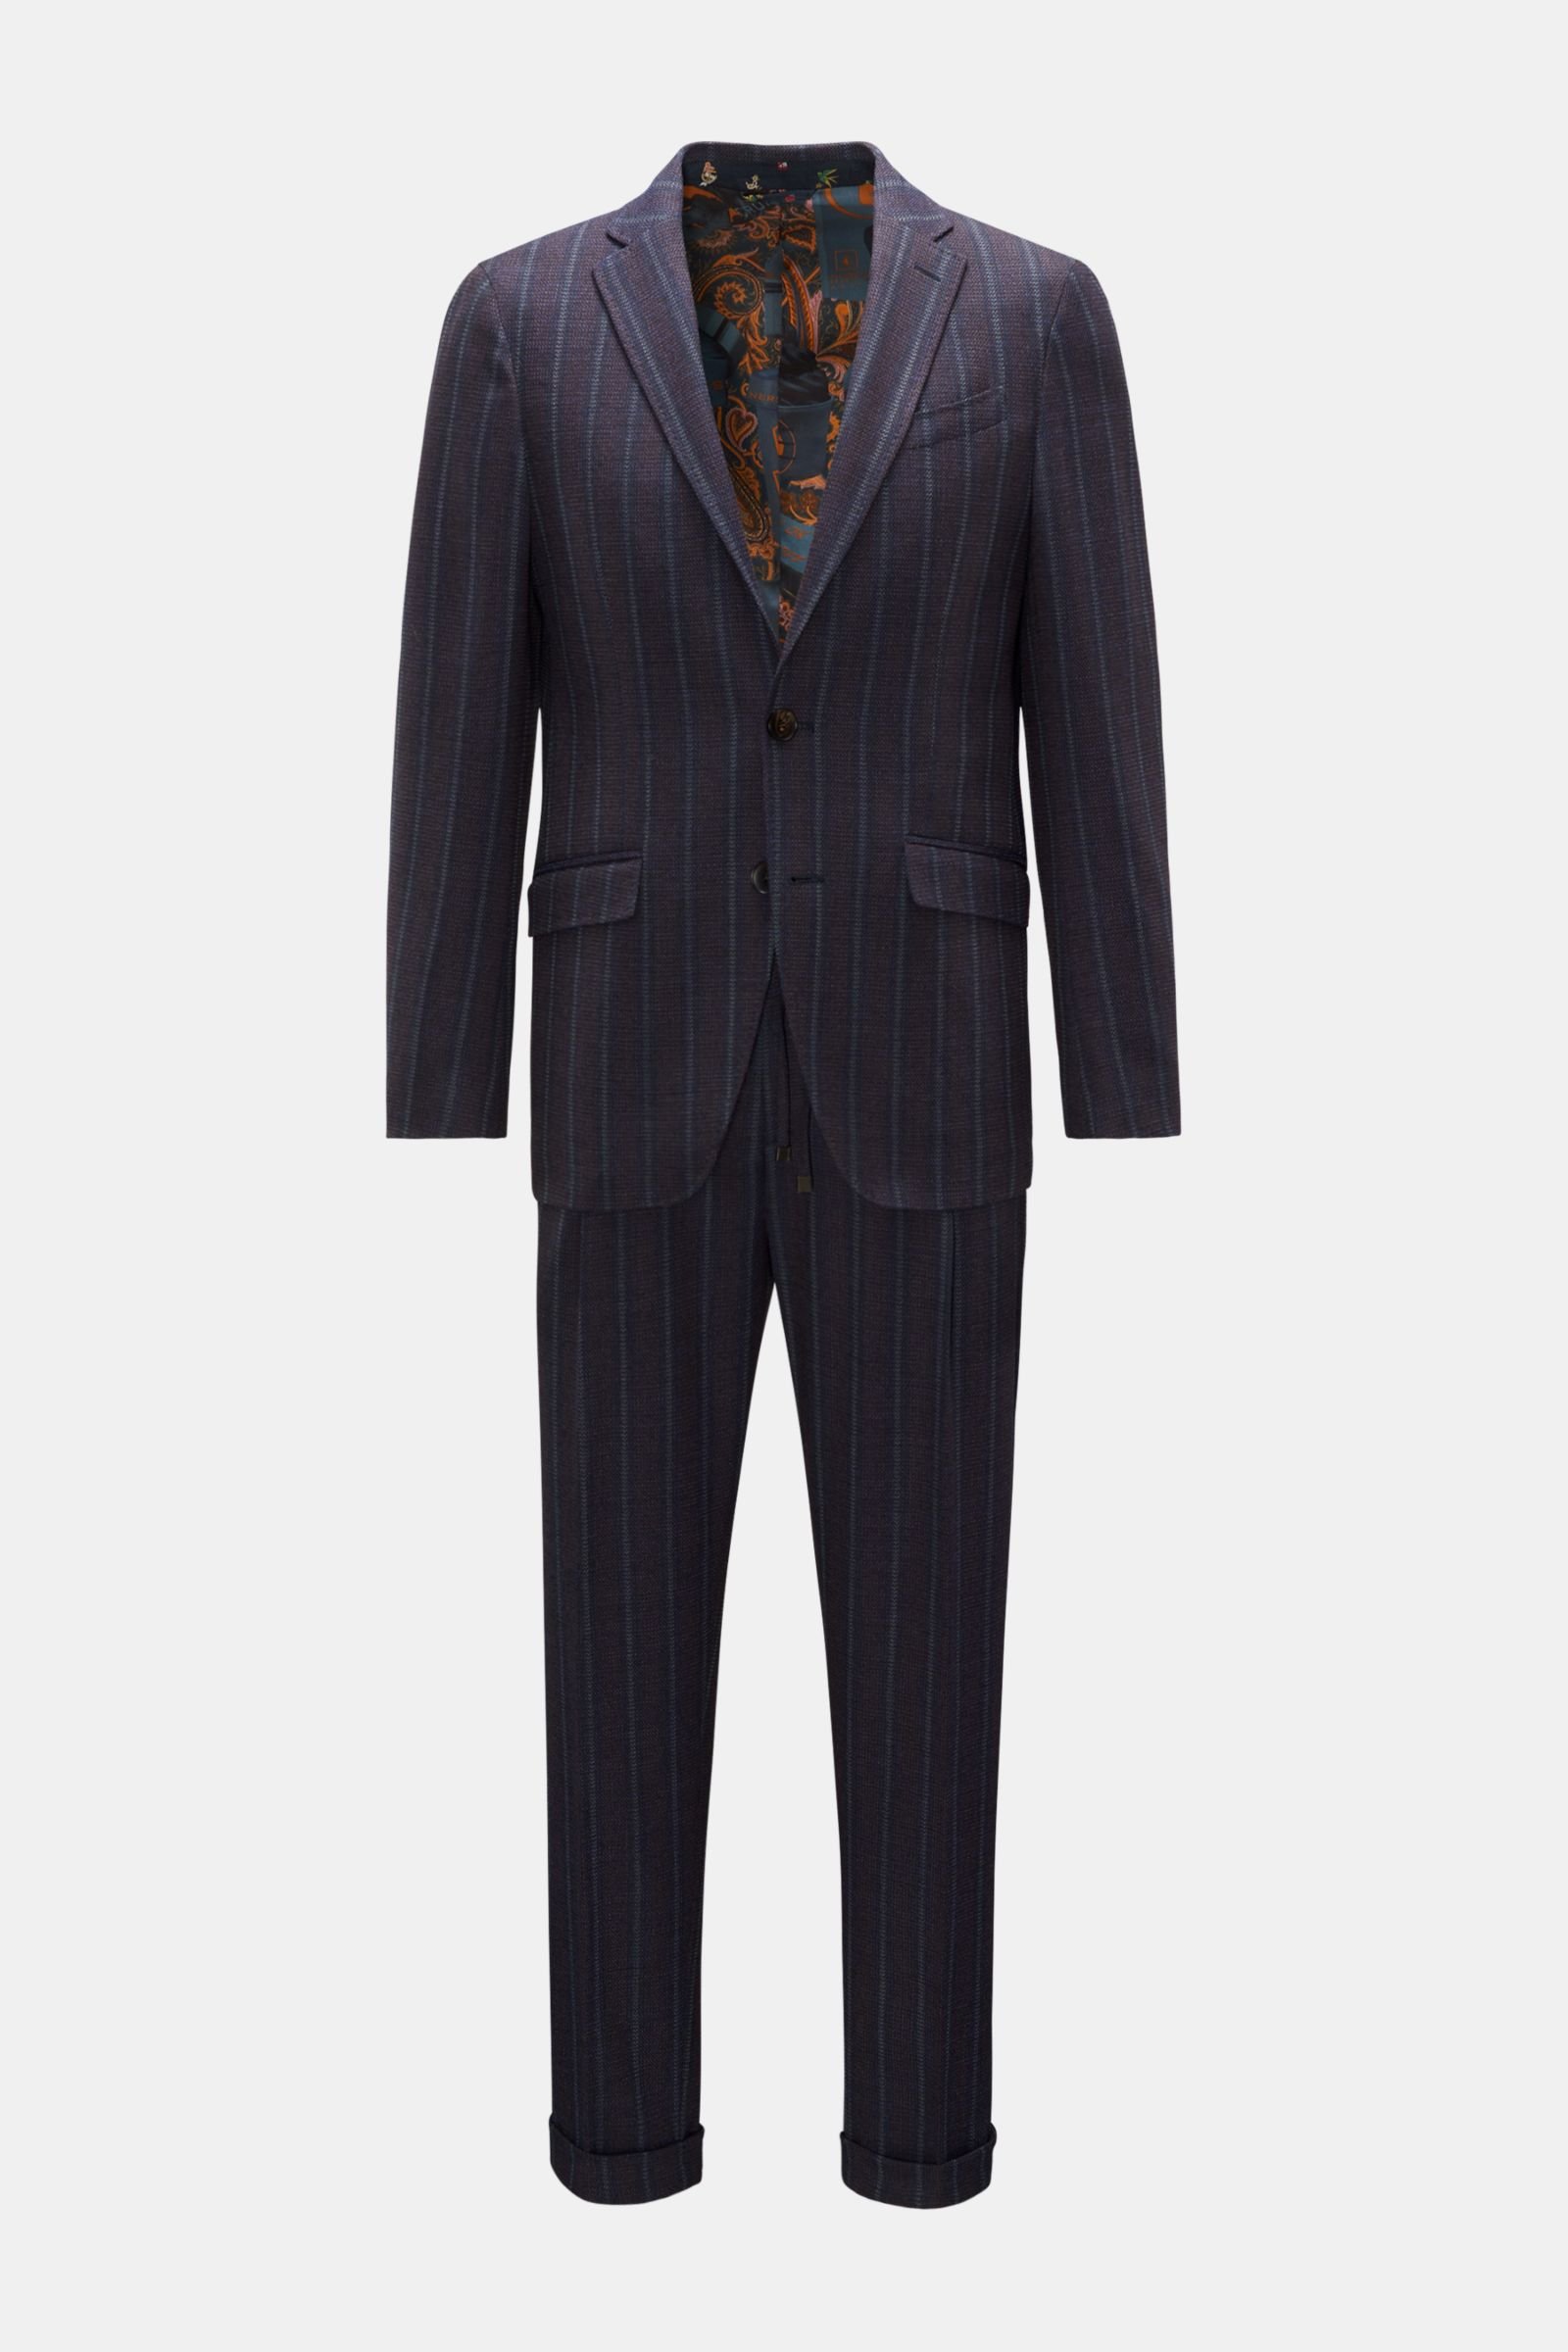 Suit navy/light grey striped